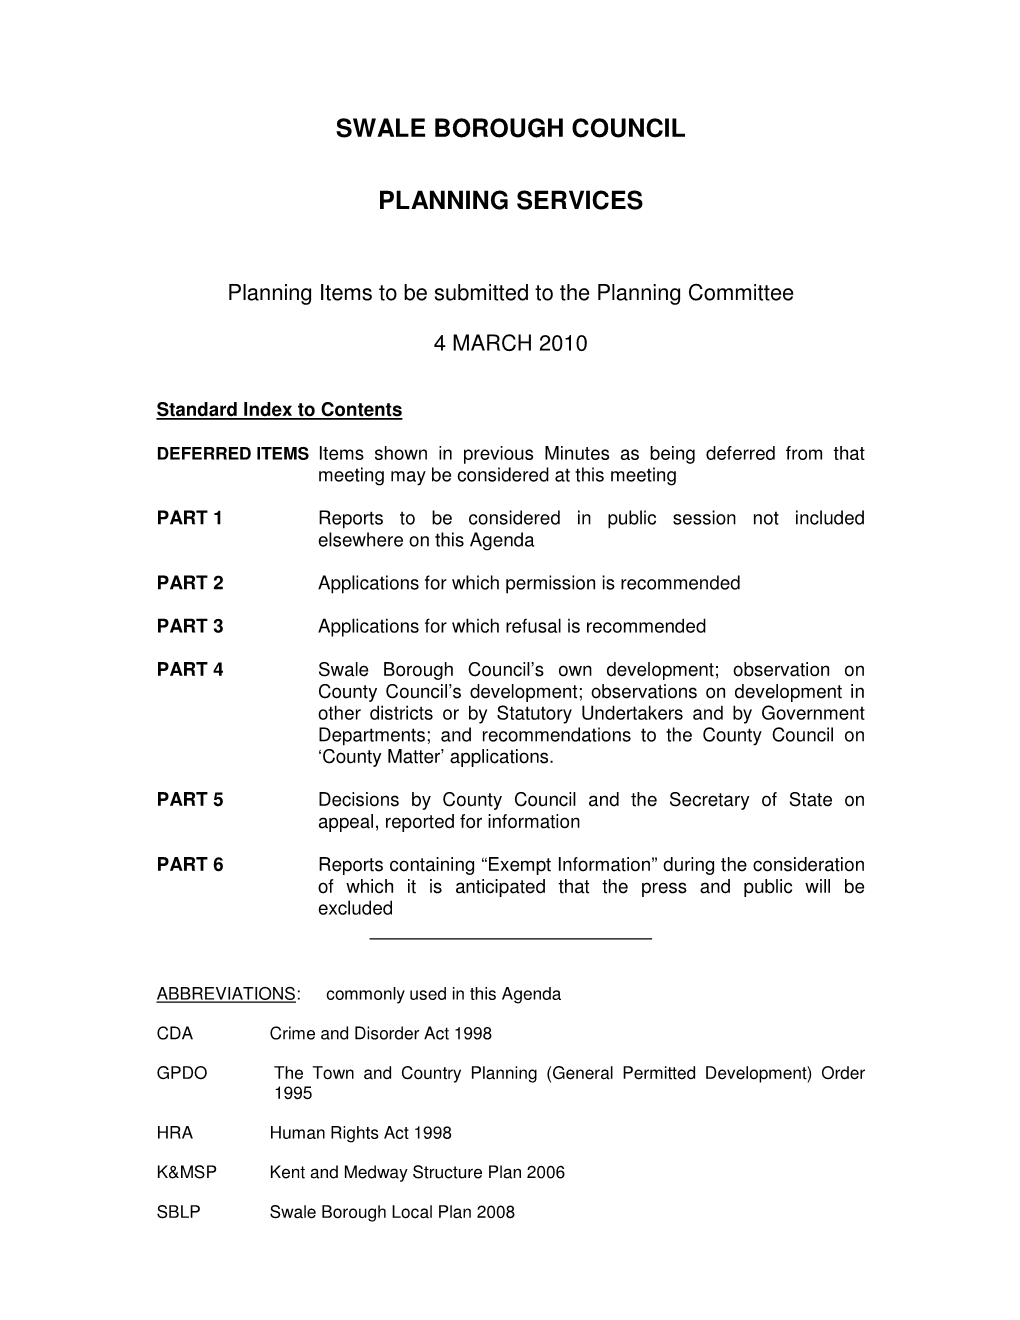 Swale Borough Council Planning